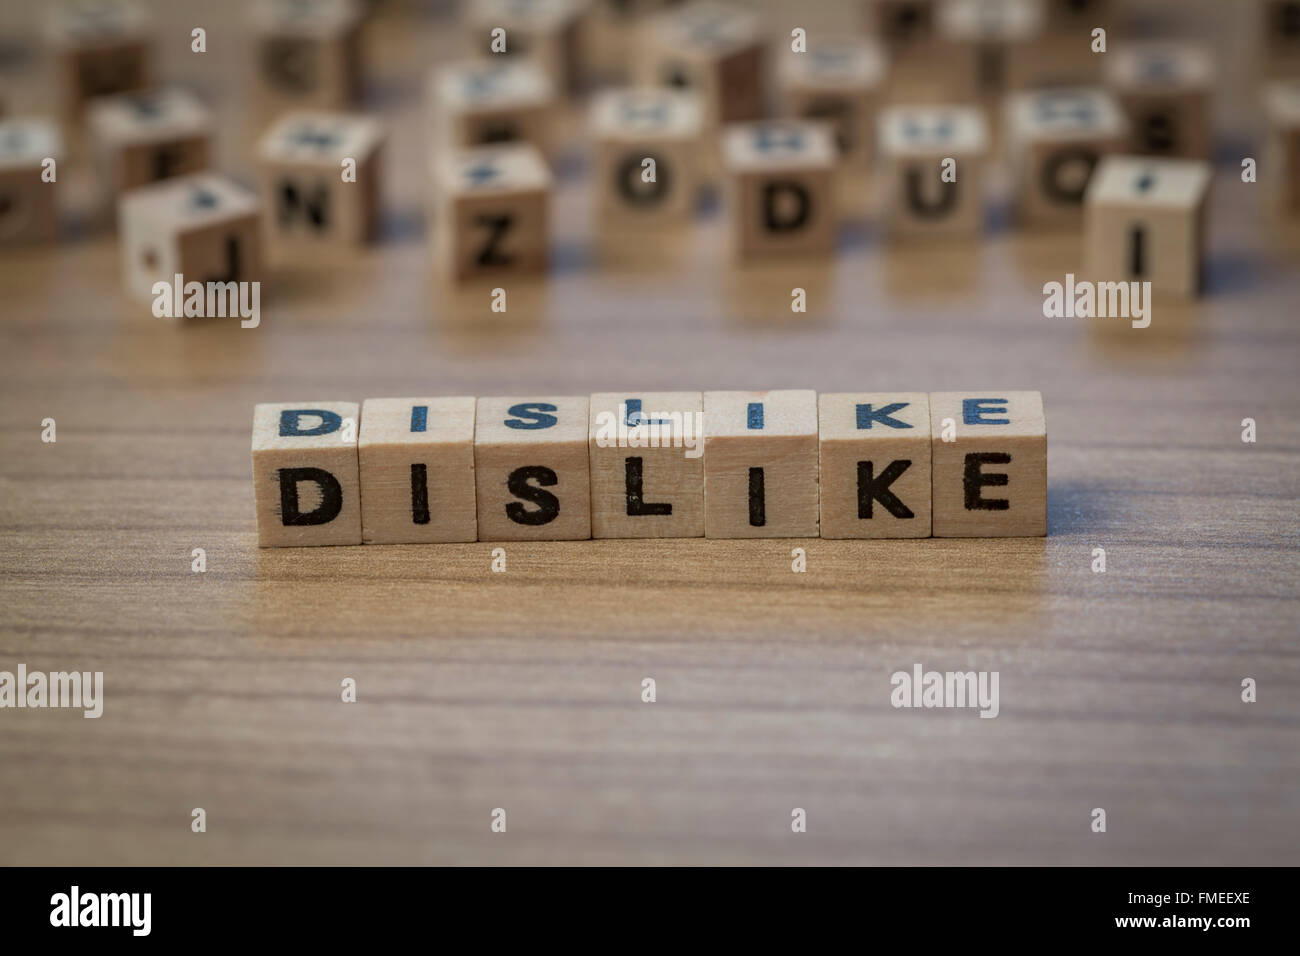 Dislike written in wooden cubes on a table Stock Photo